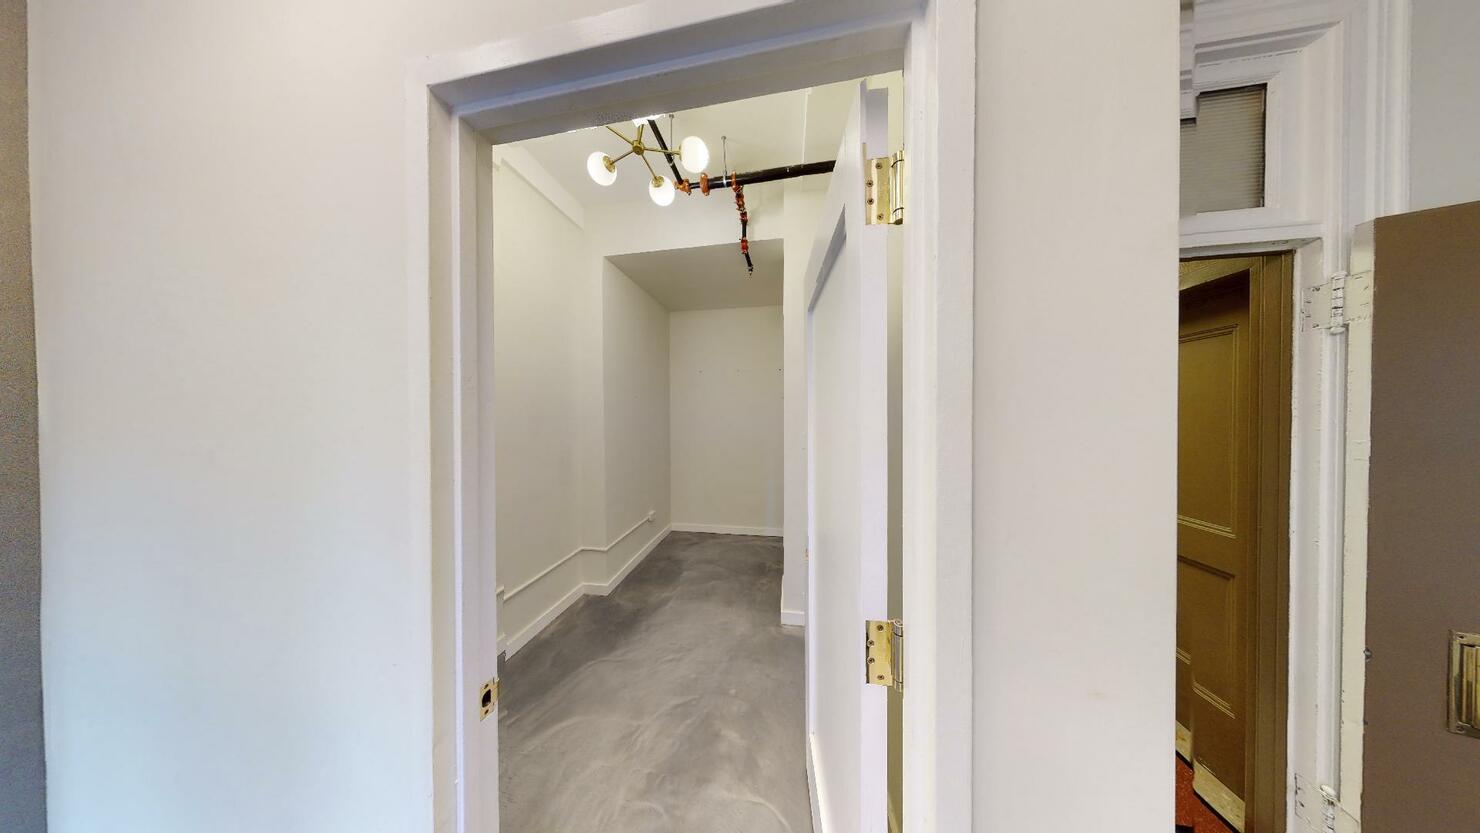 501 Fifth Avenue Office Space, Suite #1701 - Hallway